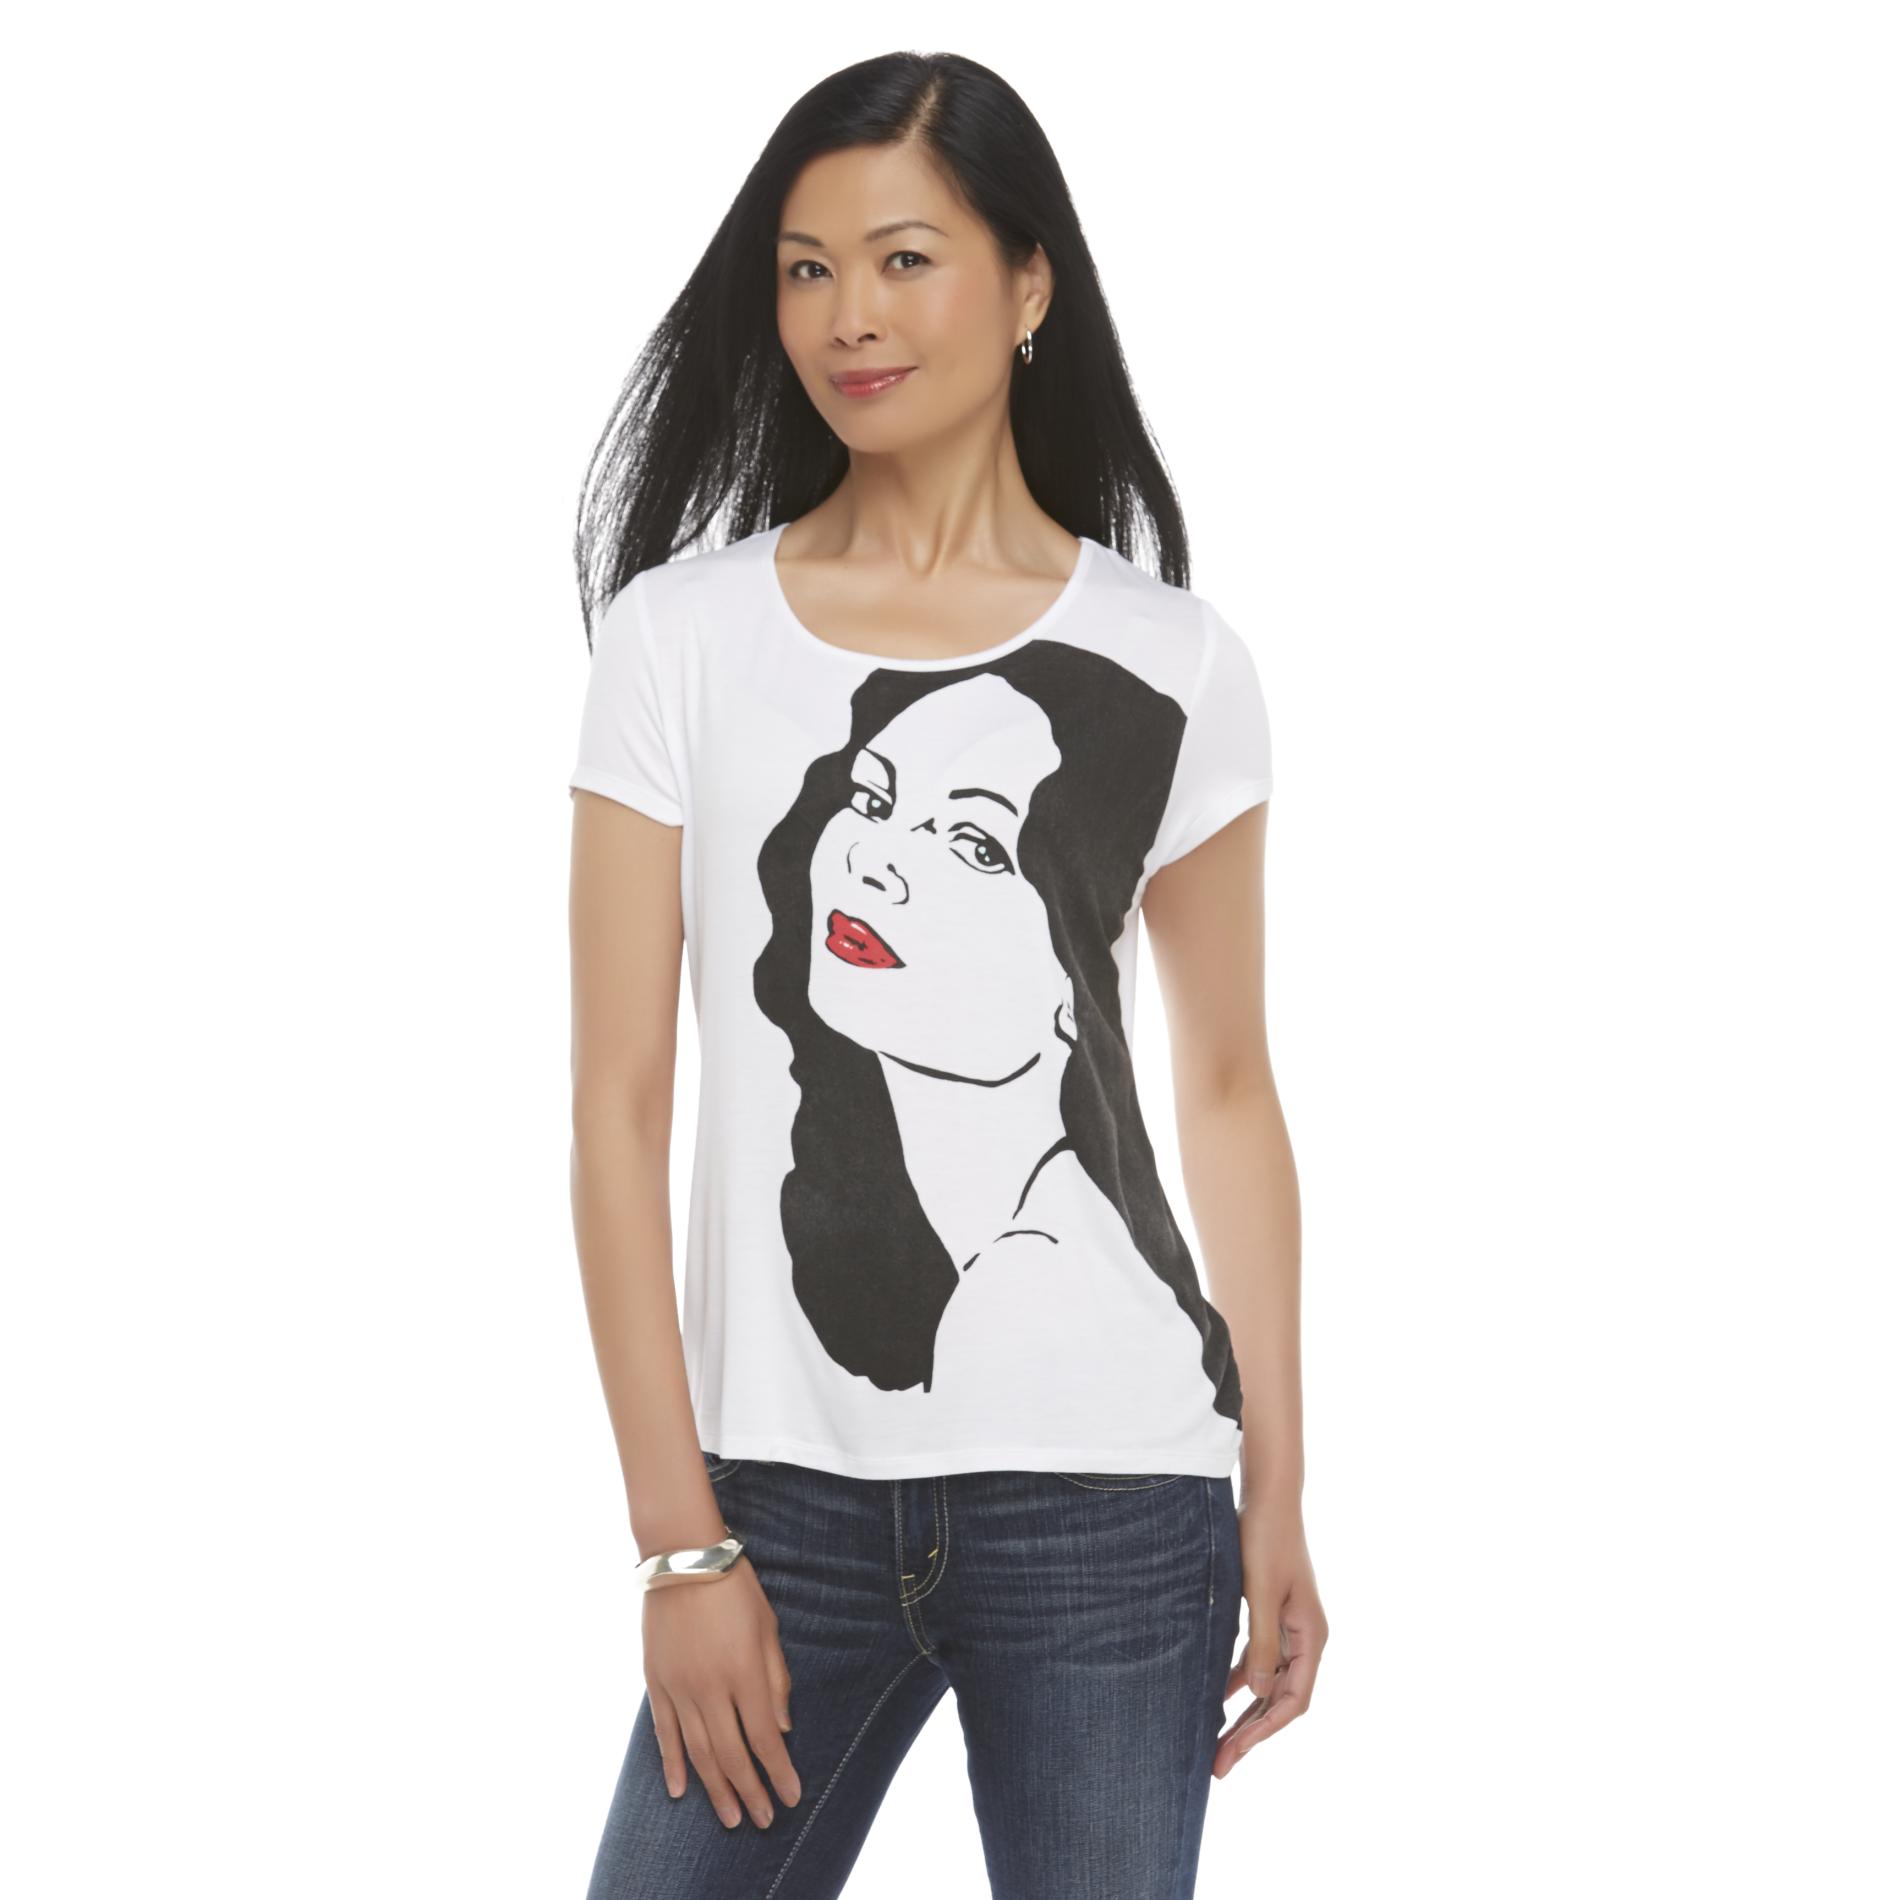 Jaclyn Smith Women's Graphic T-Shirt - Pop Art